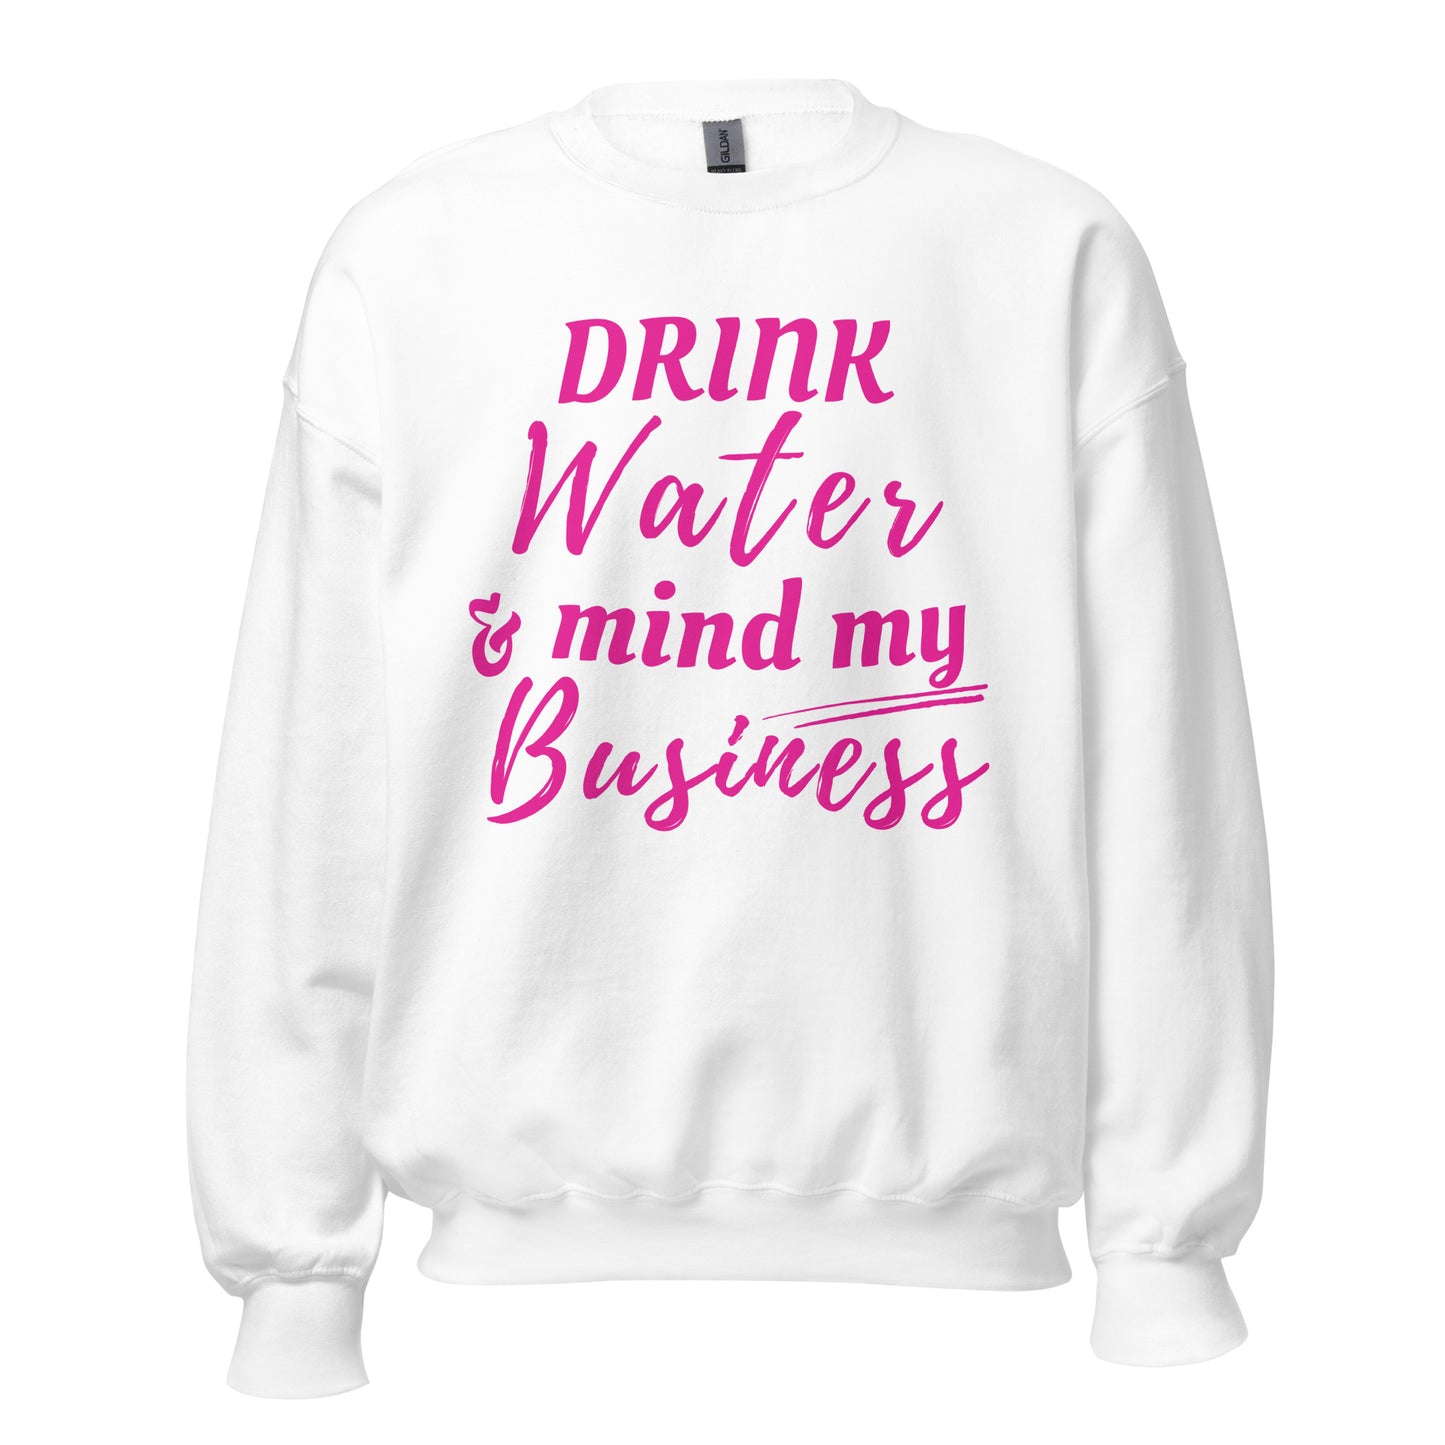 "Drink Water and Mind my Business" Women's Sweatshirt